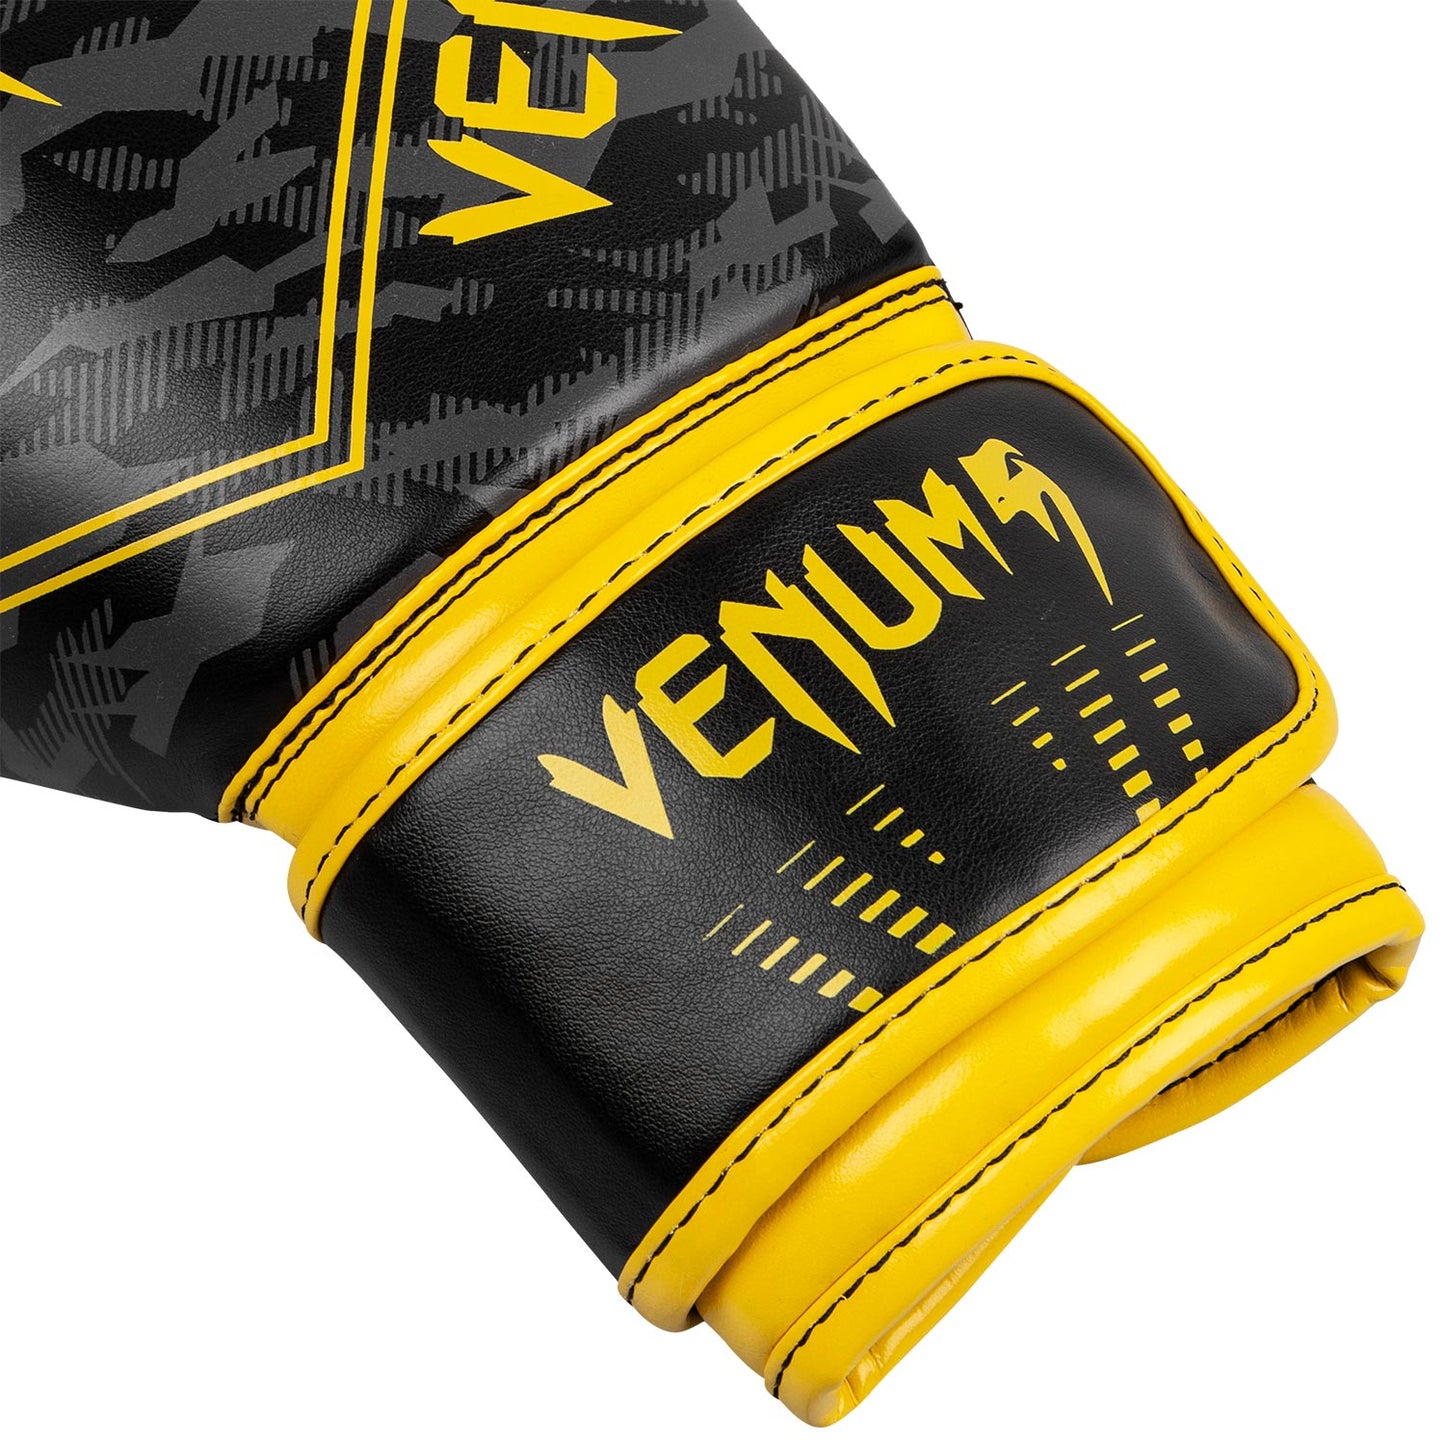 Venum Okinawa 2.0 Kids Boxing Gloves - Black/Yellow